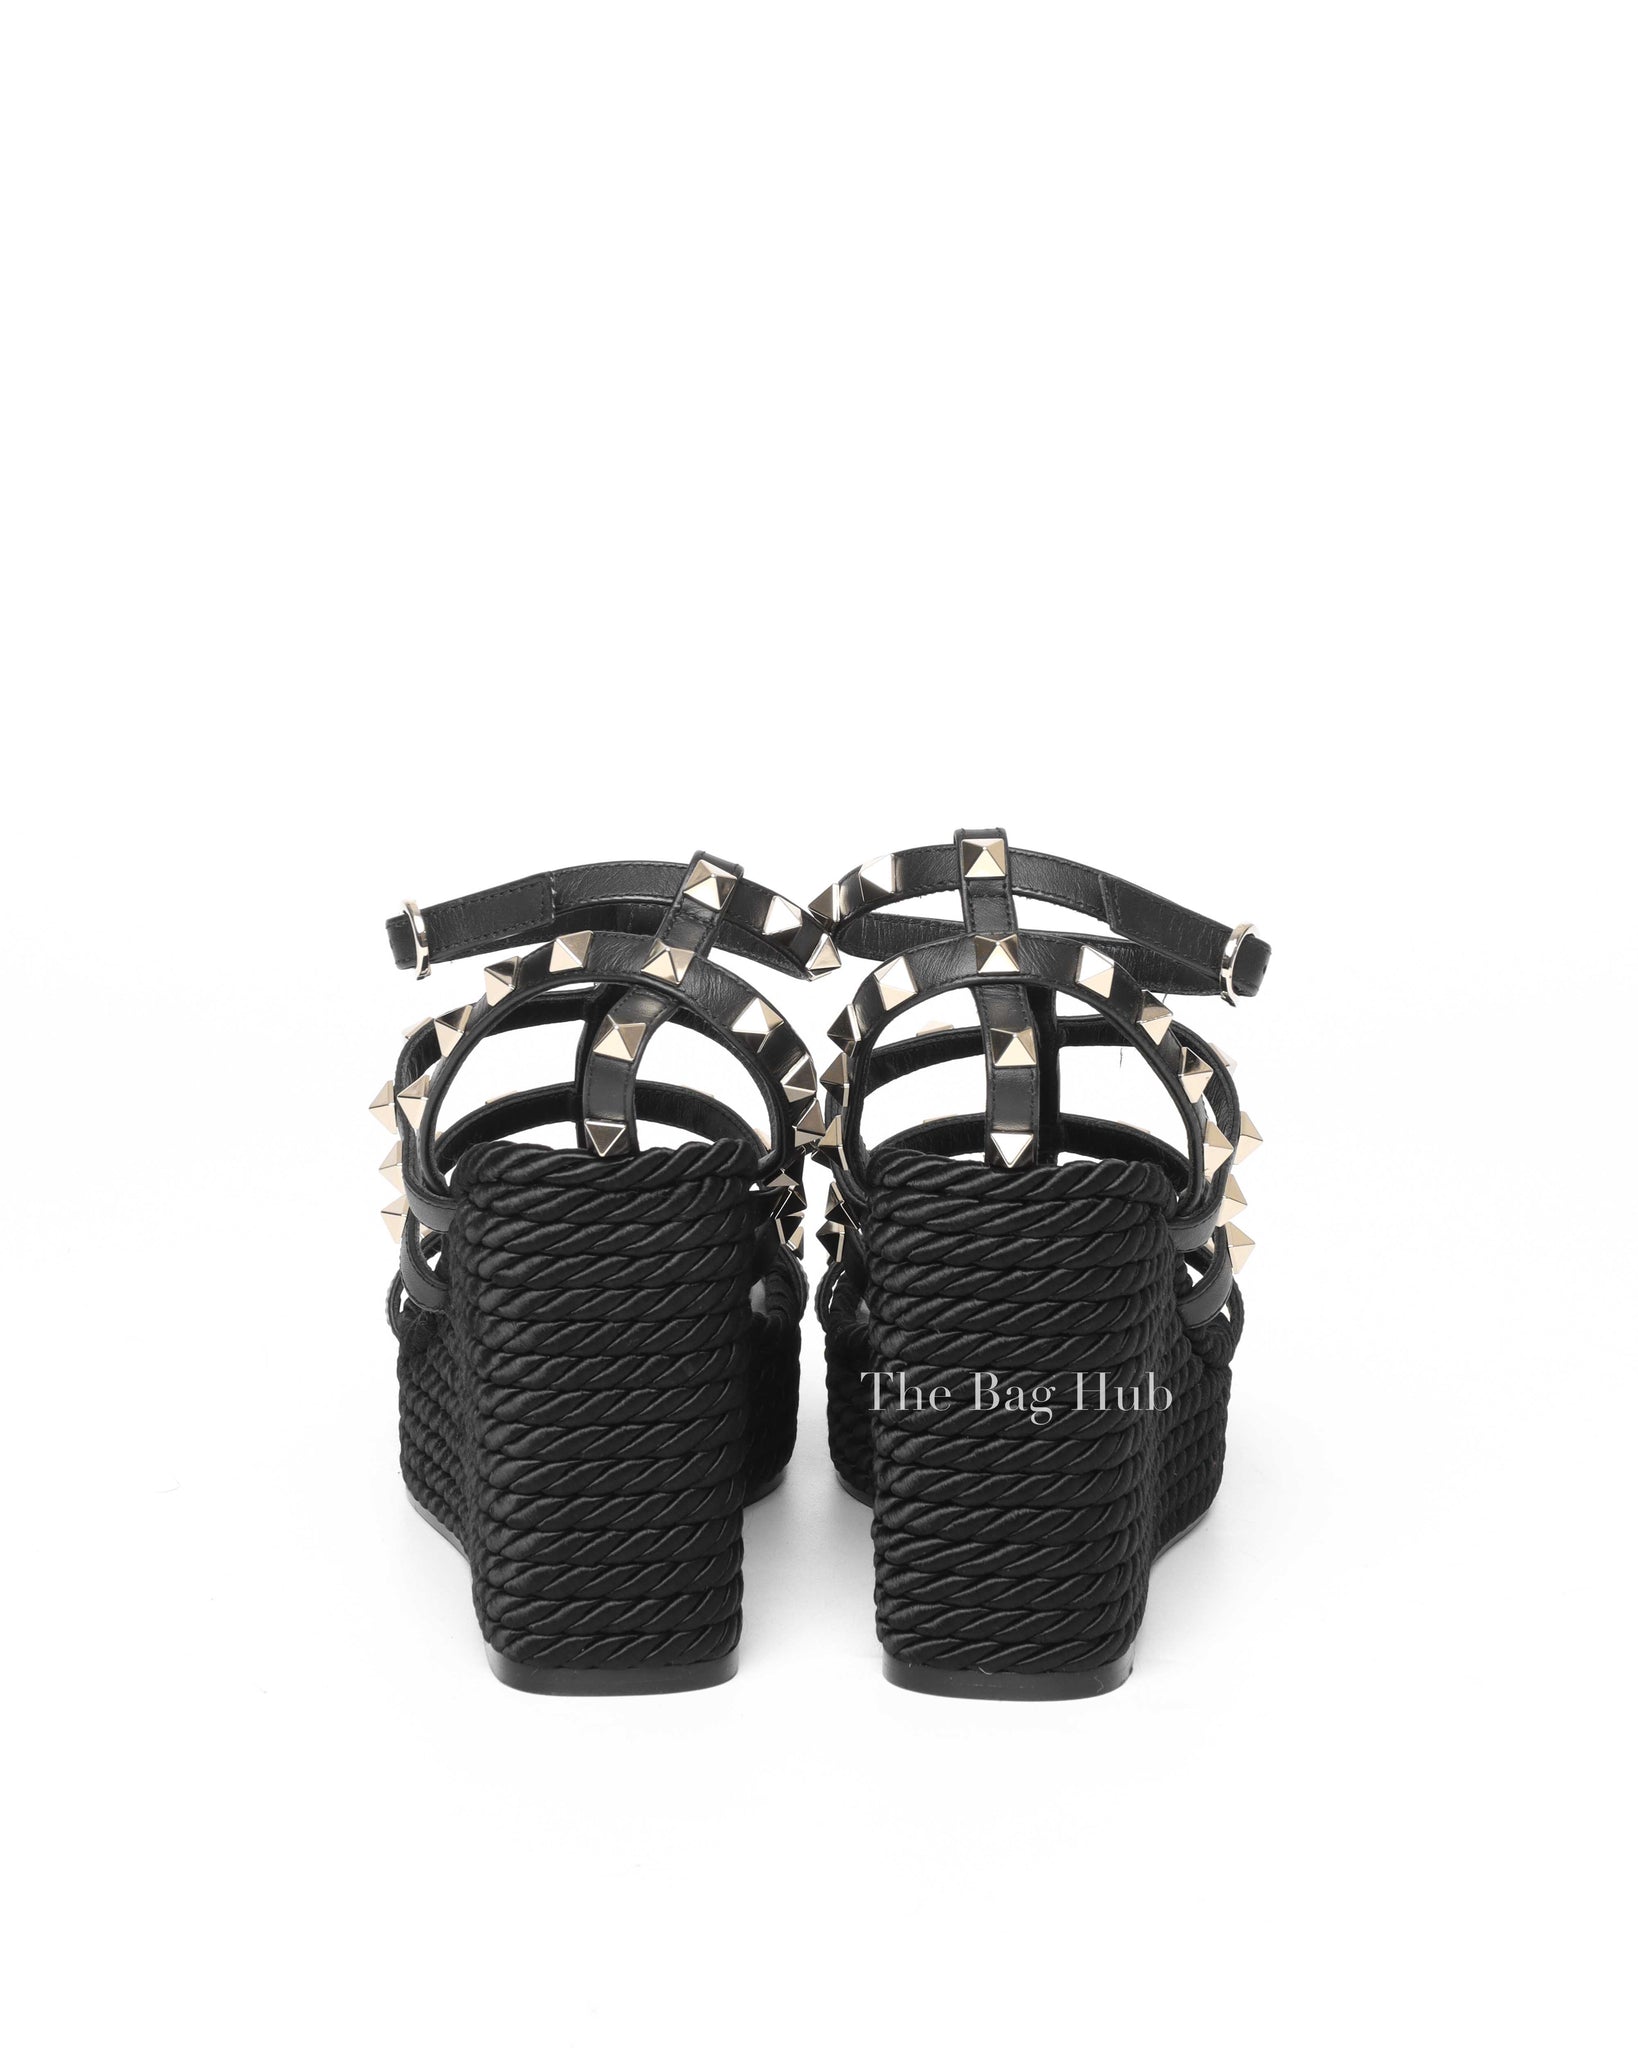 Valentino Garavani Black Rockstud Ankle Strap Wedge Sandal 95MM Size 35-6